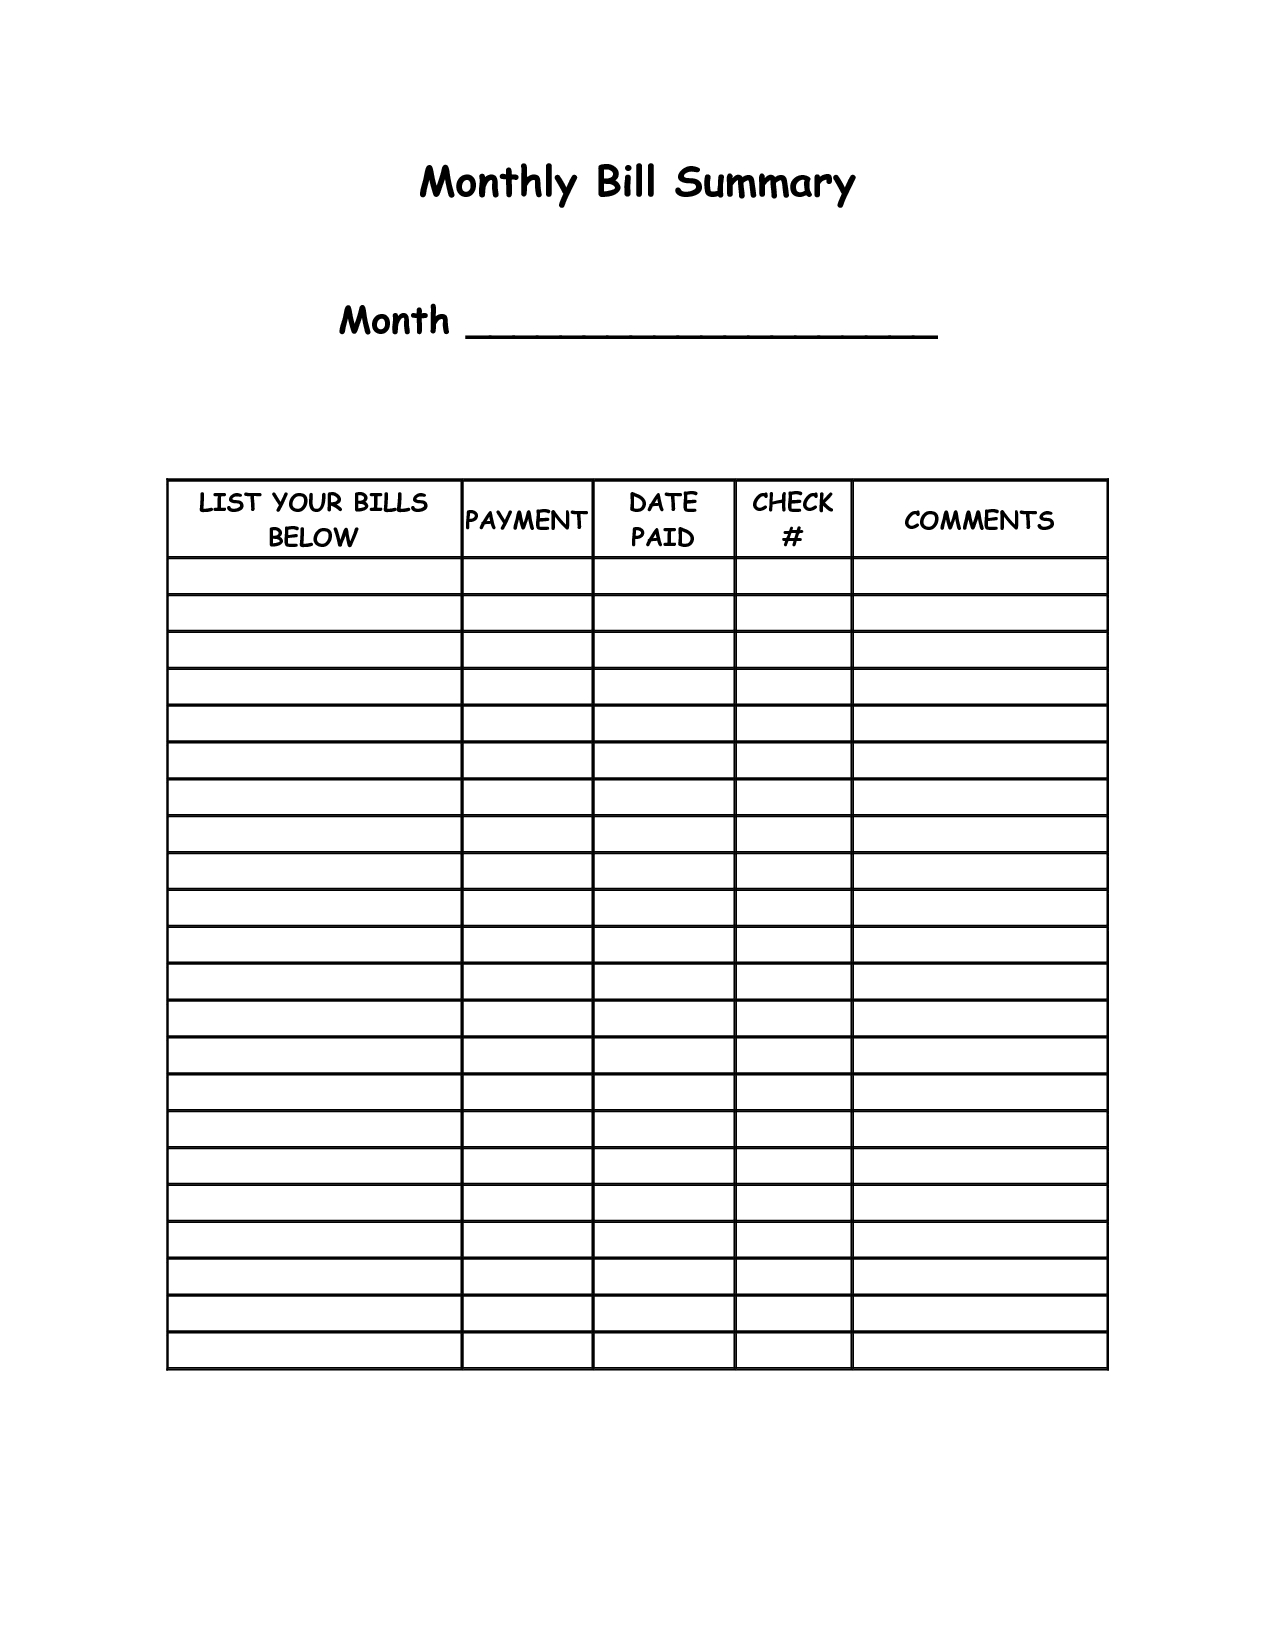 Monthly Bill Summary Doc | Organizing Monthly Bills, Bill regarding Monthly Bill Payment Worksheet